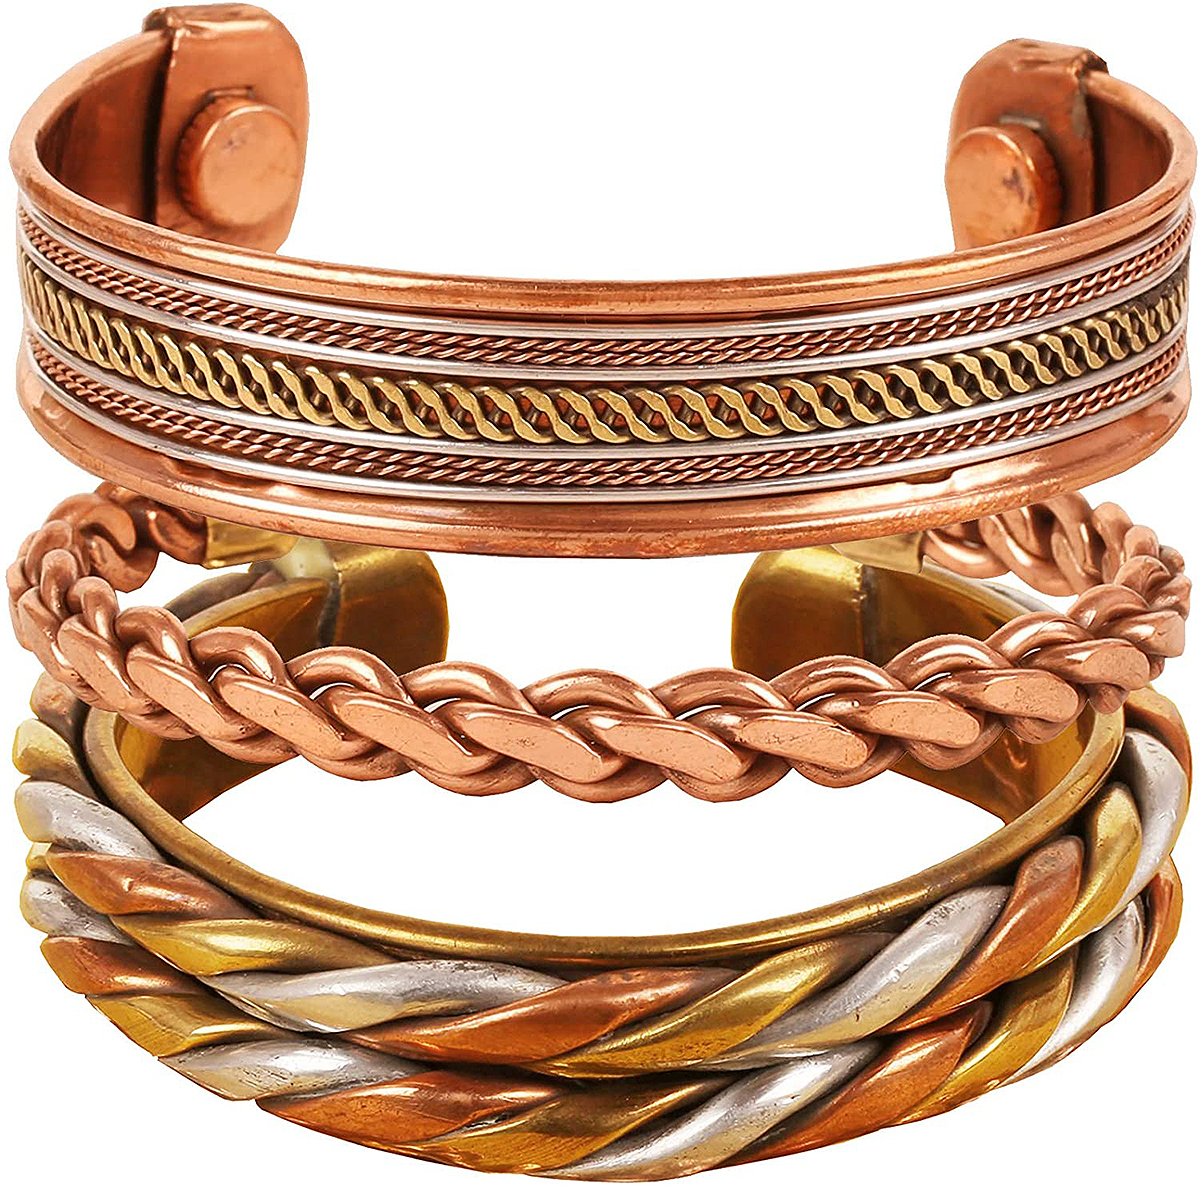 Amazoncom MagEnergy Copper Bracelet for Men Solid Copper Magnetic  Bracelets Magnet Healing Jewelry Elegant Life of Tree Golf Bracelet Men   Health  Household